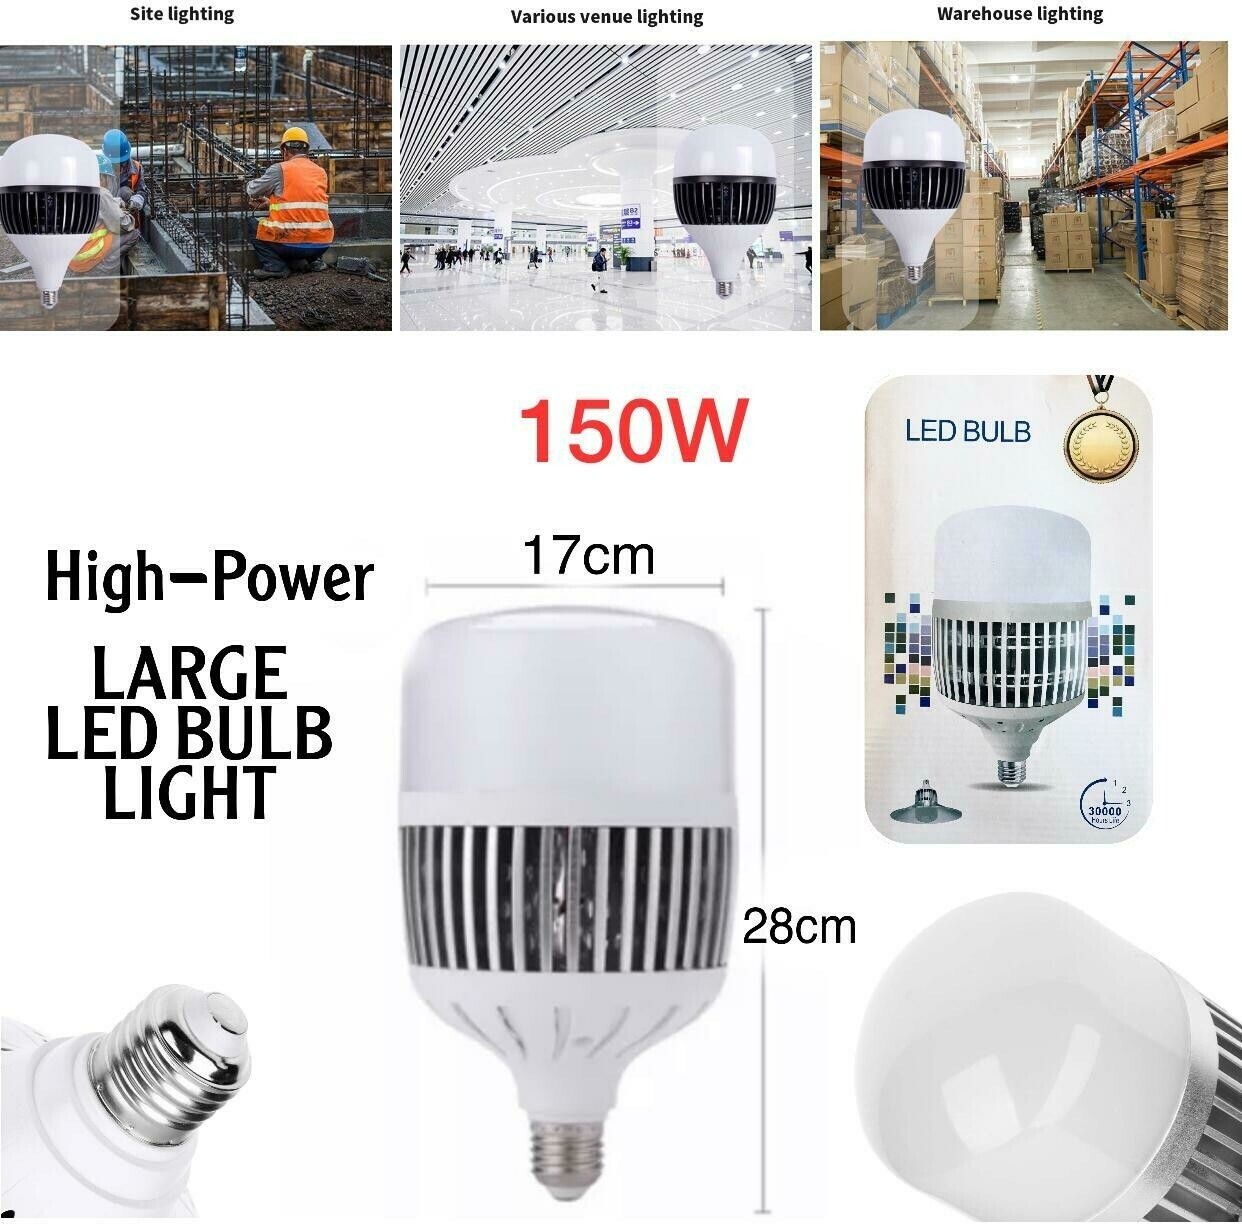 Large LED Bulb 150W